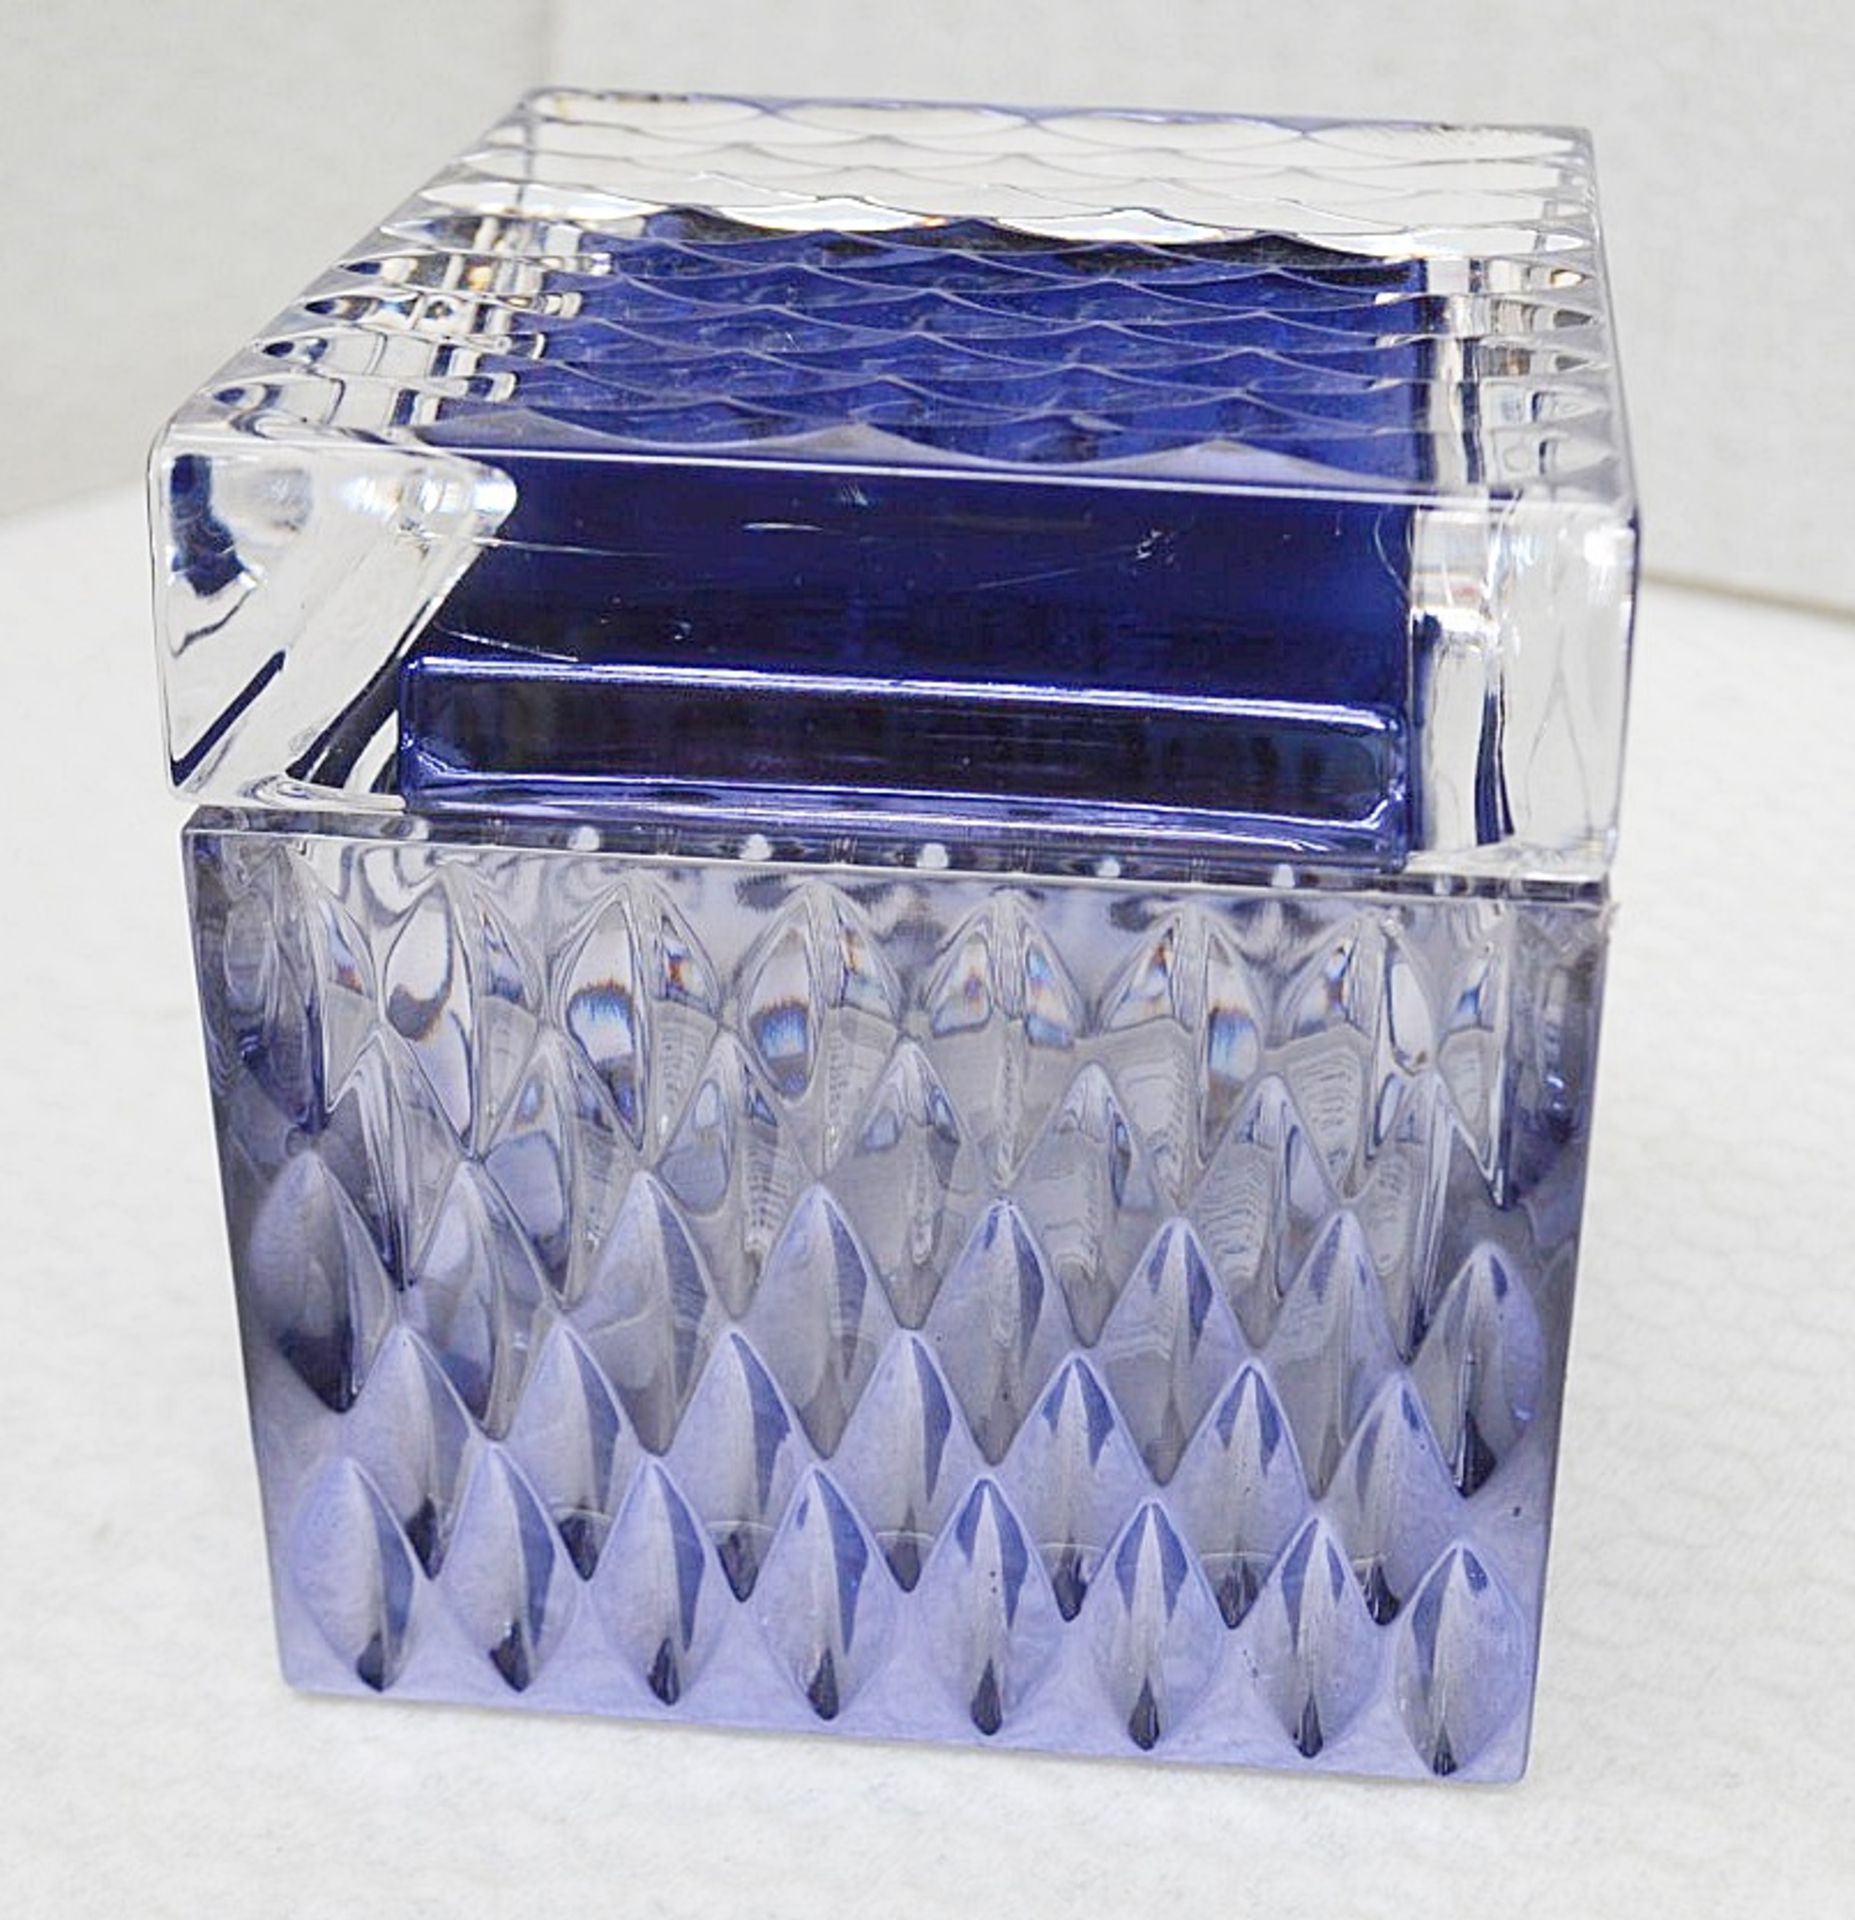 1 x BALDI 'Home Jewels' Italian Hand-crafted Artisan Perfume Box In Dark Blue Crystal - RRP £880.00